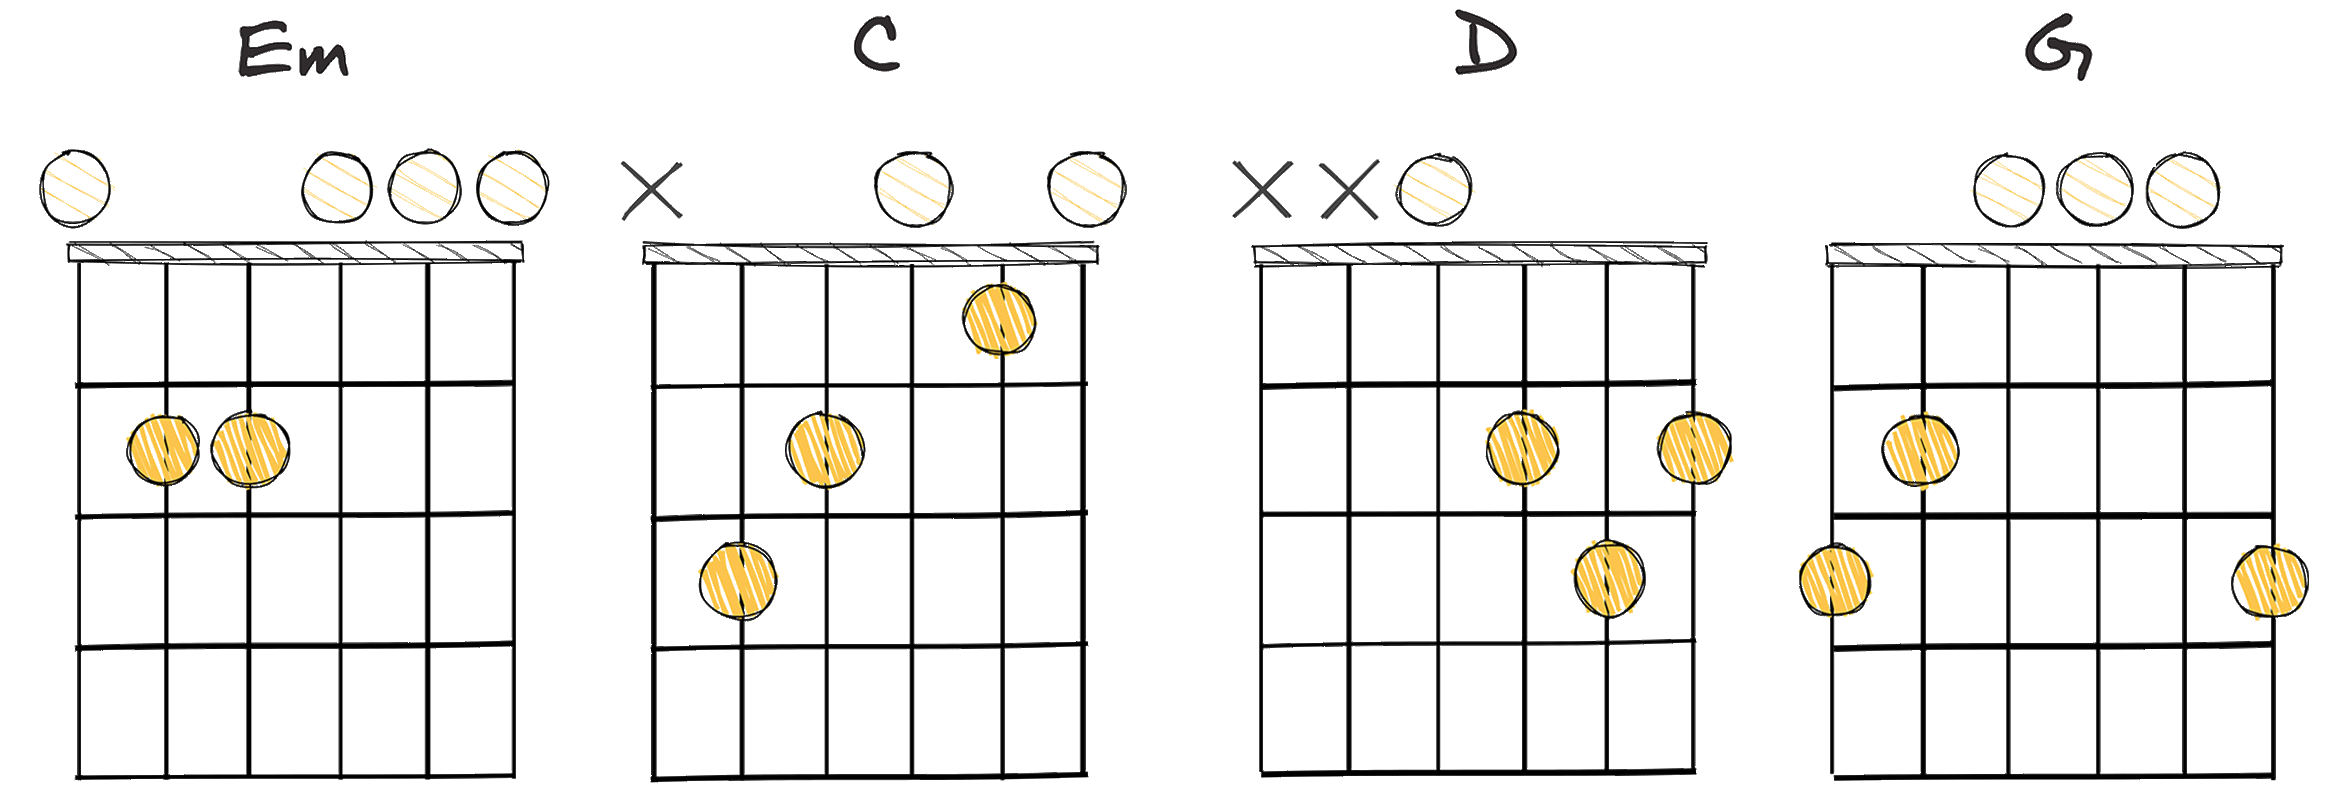 vi-IV-V-I (6-4-5-1) chords diagram